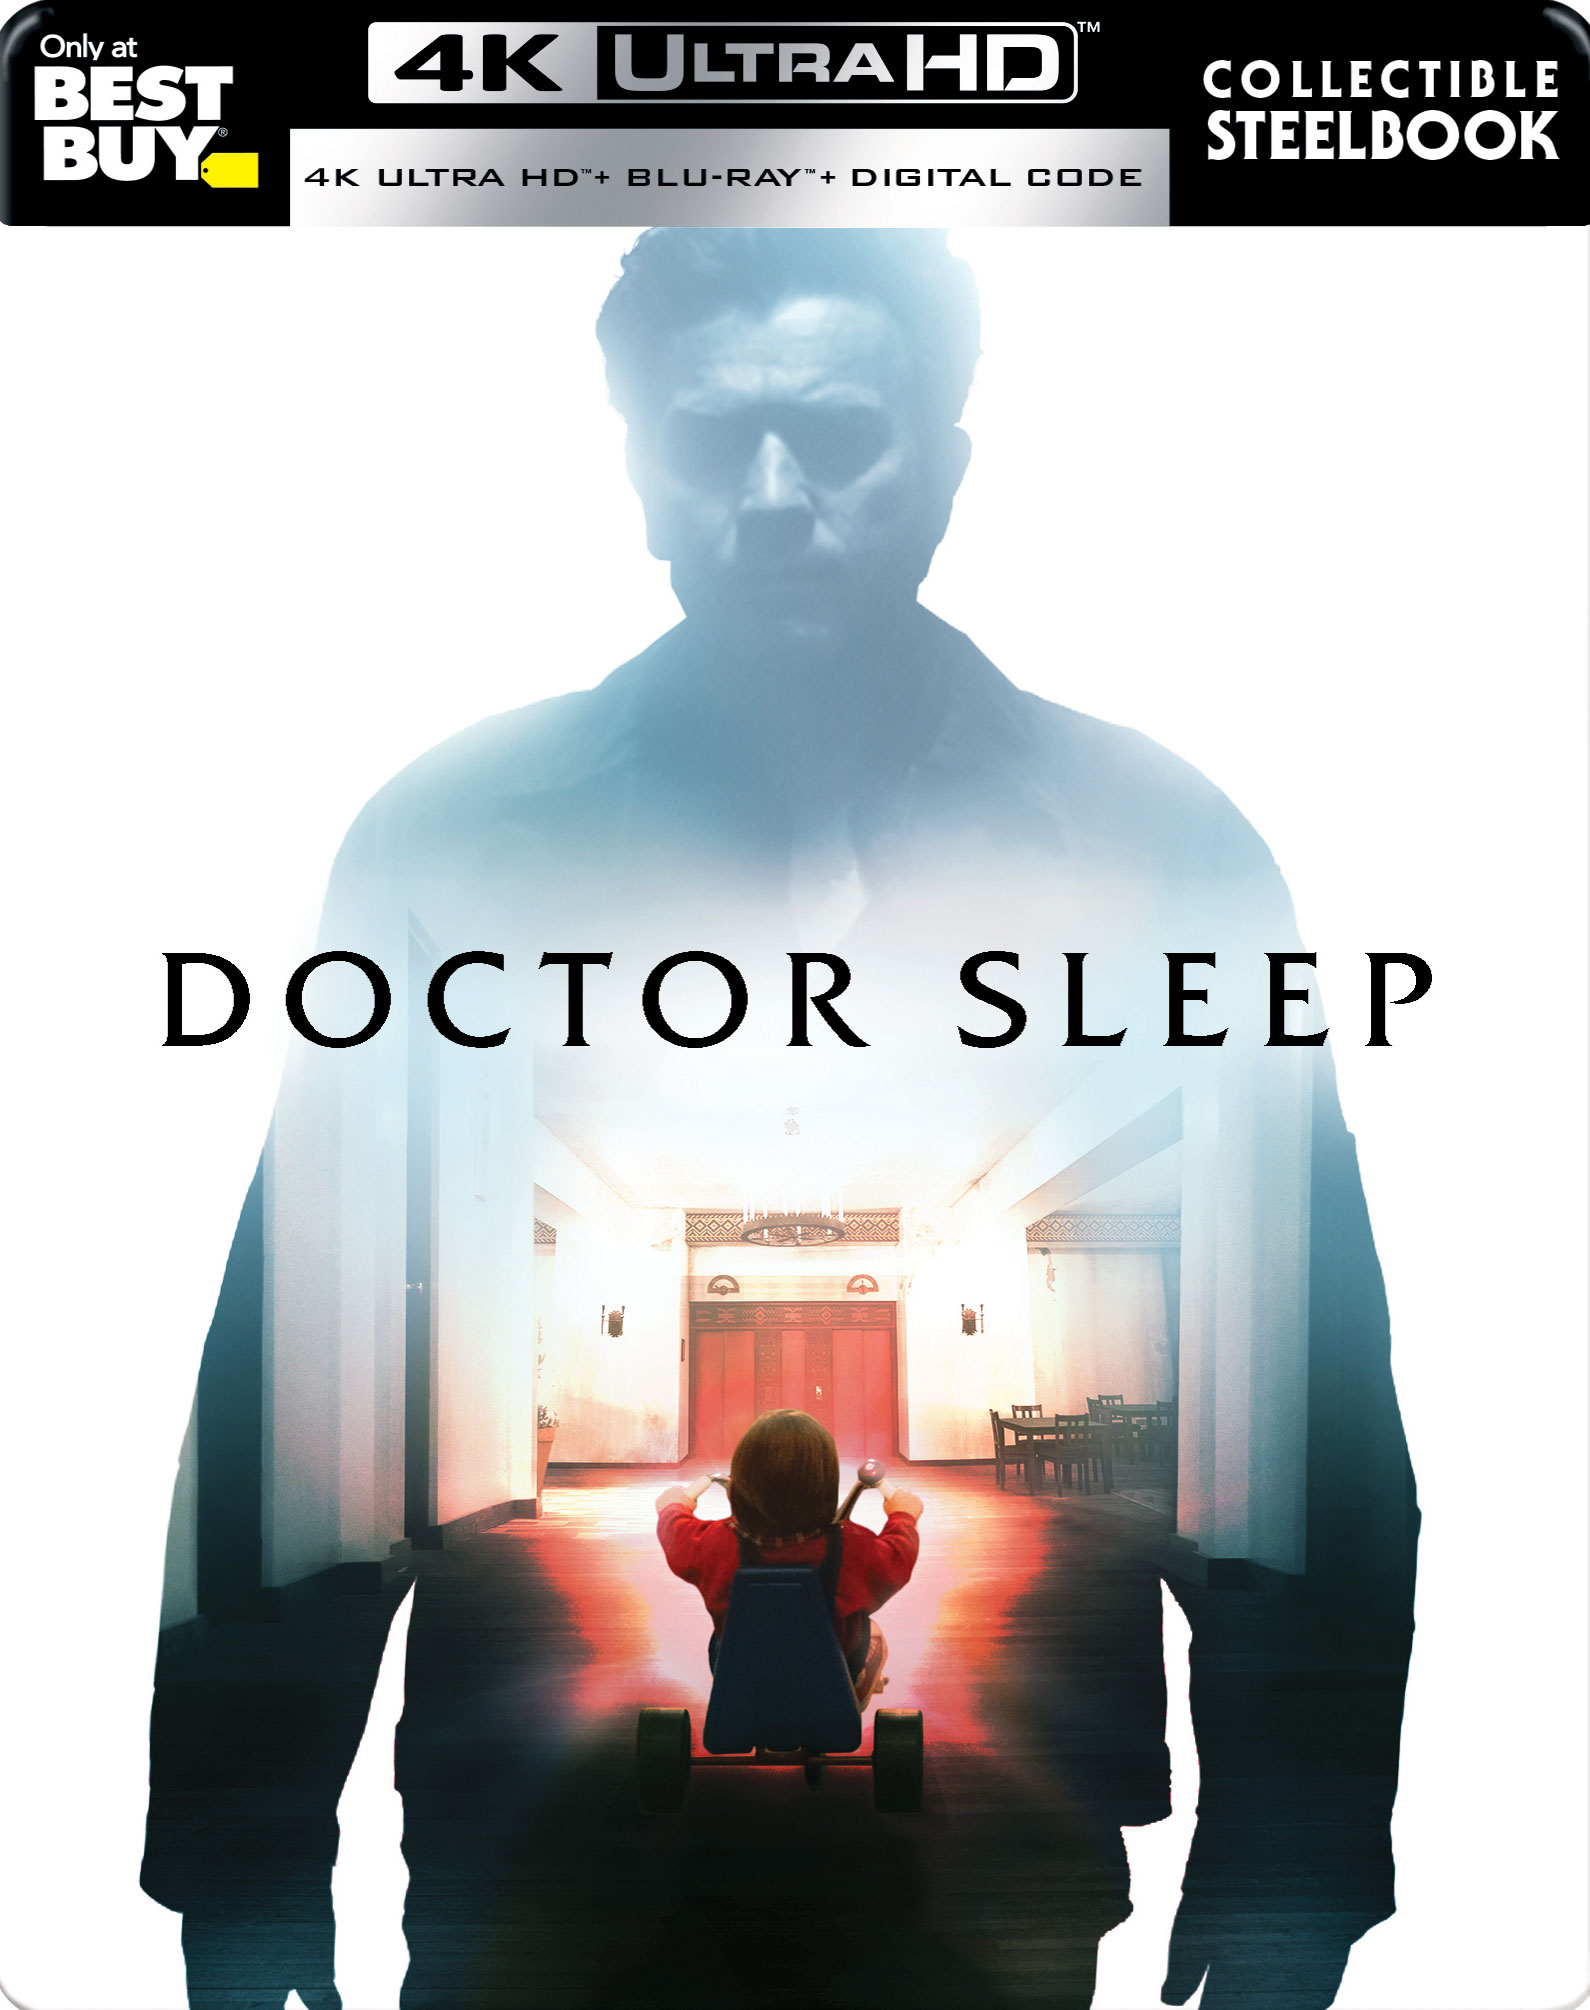 Doctor Sleep Steelbook Includes Digital Copy 4k Ultra Hd Blu Ray Blu Ray Only Best Buy 2019 Best Buy